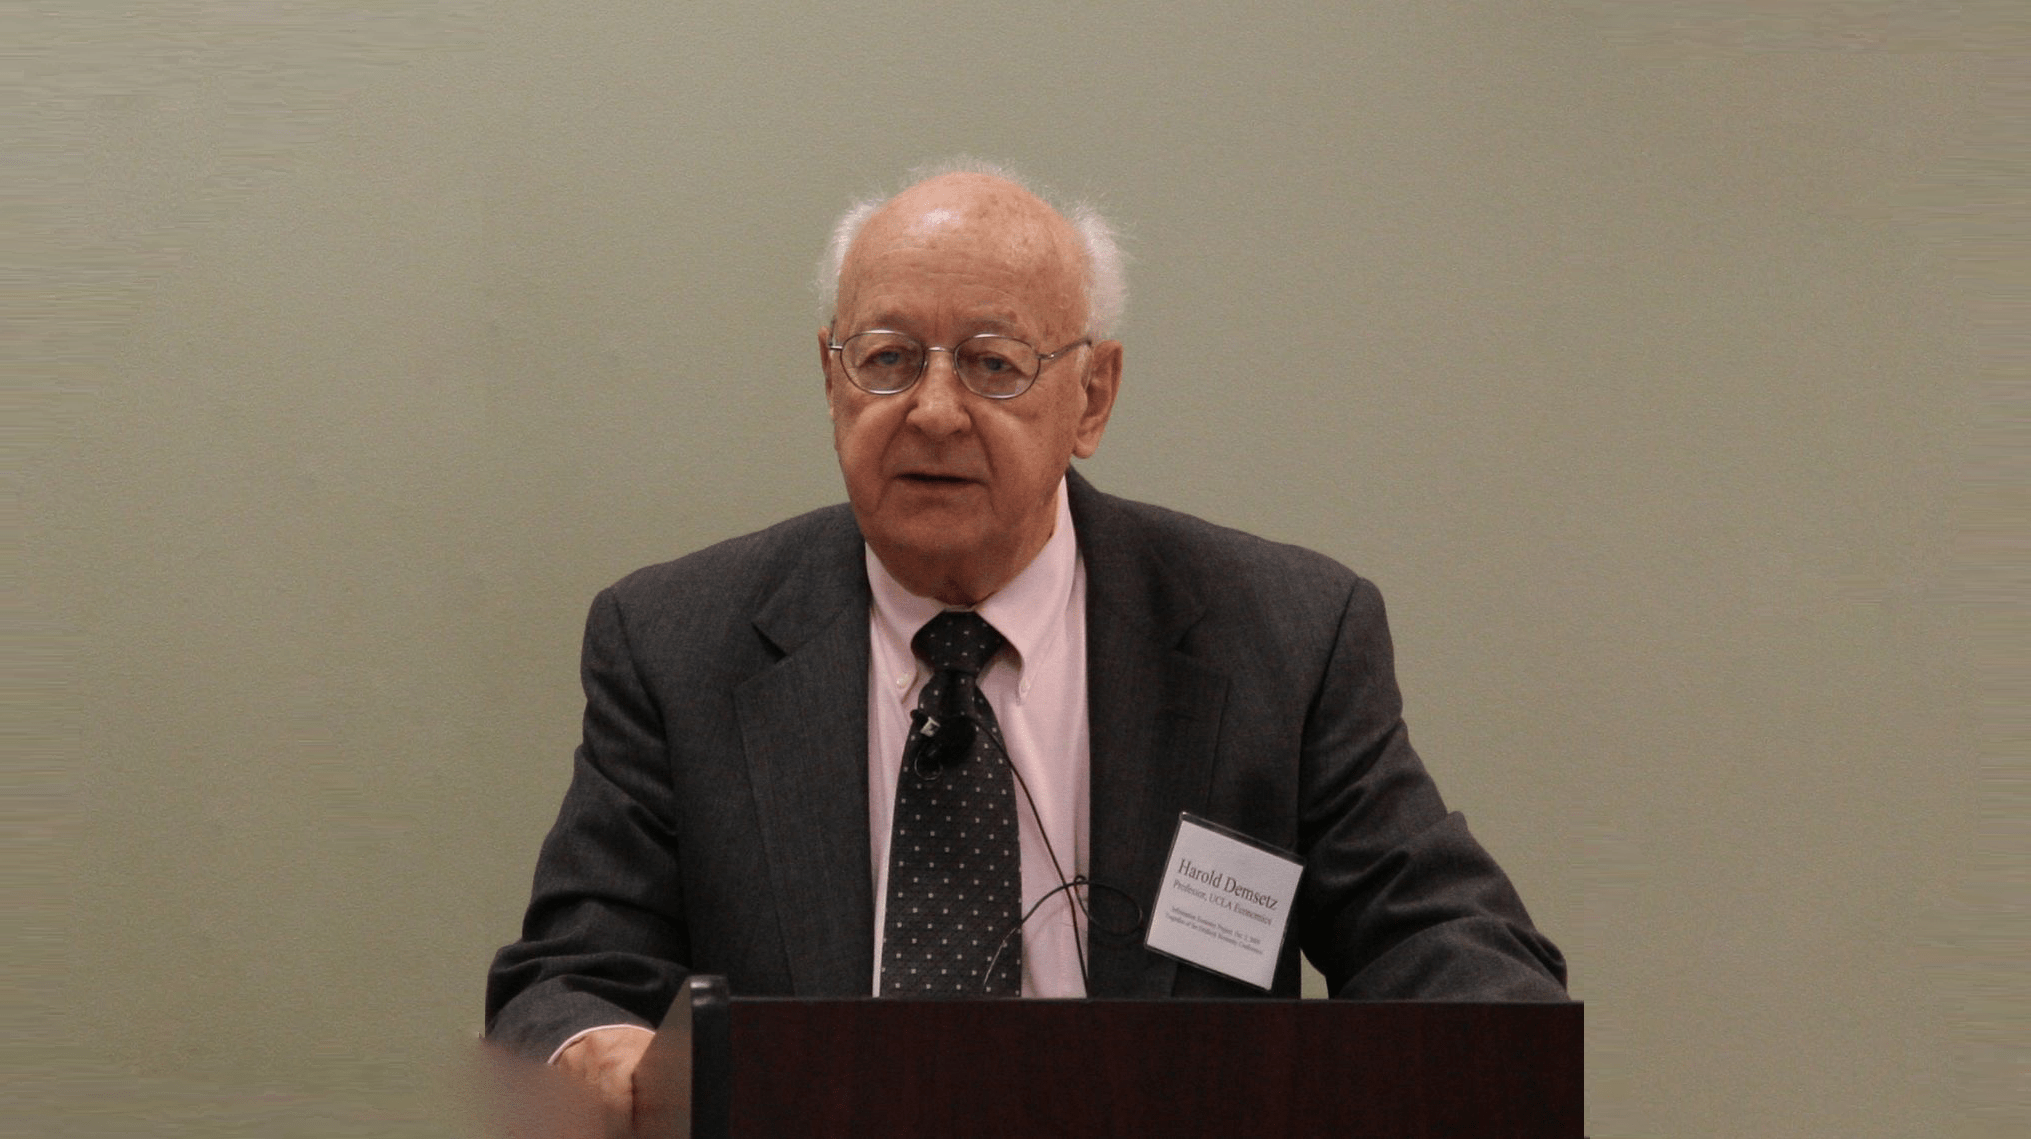 Harold Demsetz 101: The Pioneer of New Institutional Economics